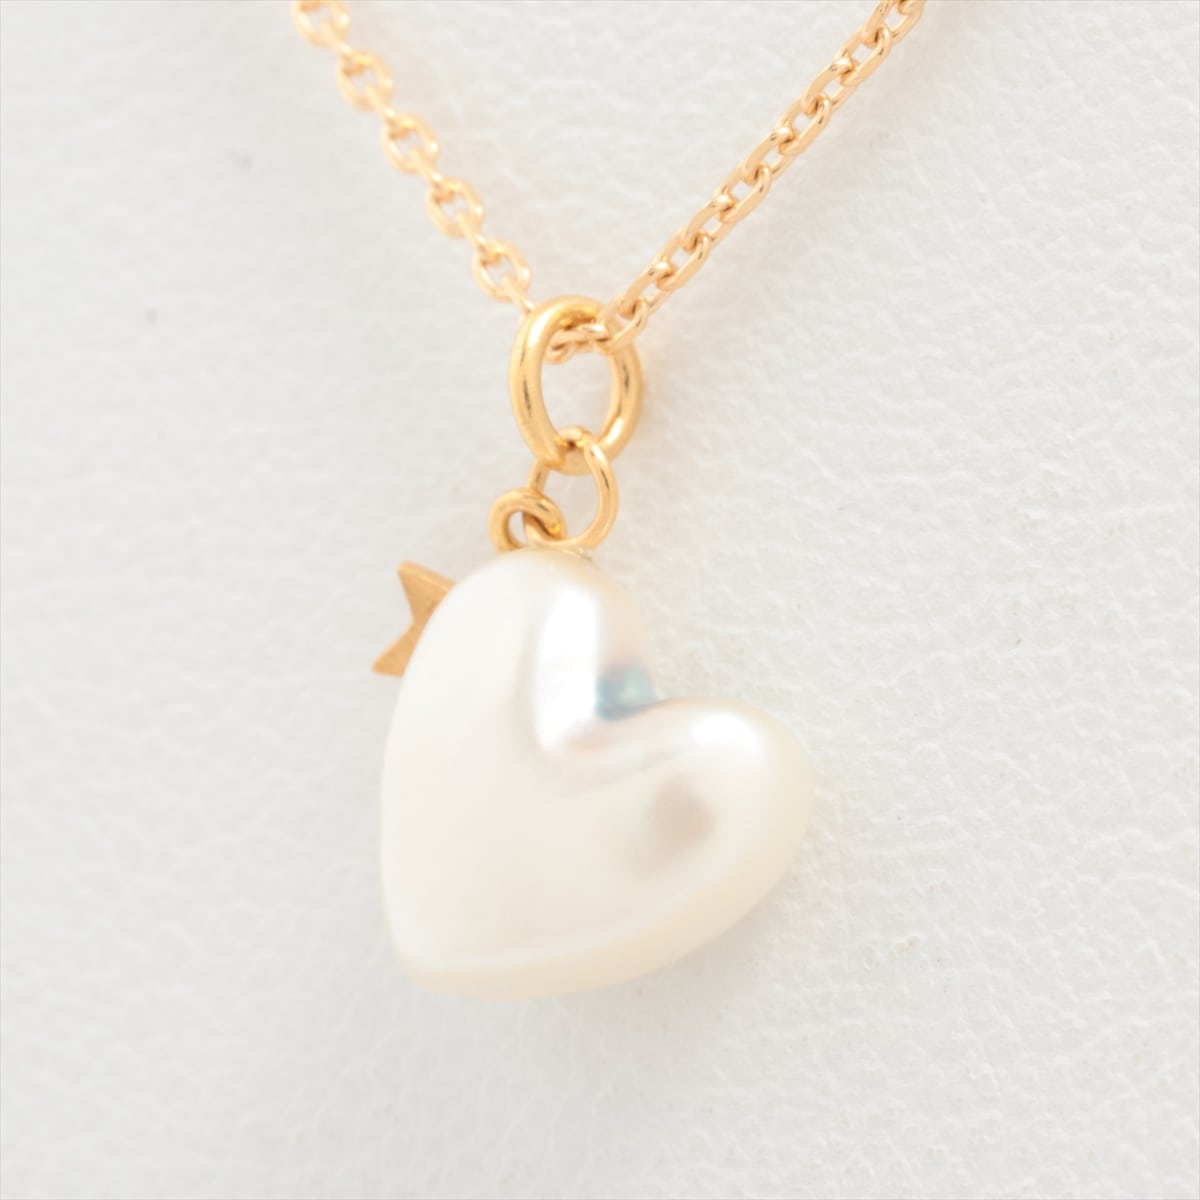 TASAKI TASAKI hearts Pearl Necklace 750YG